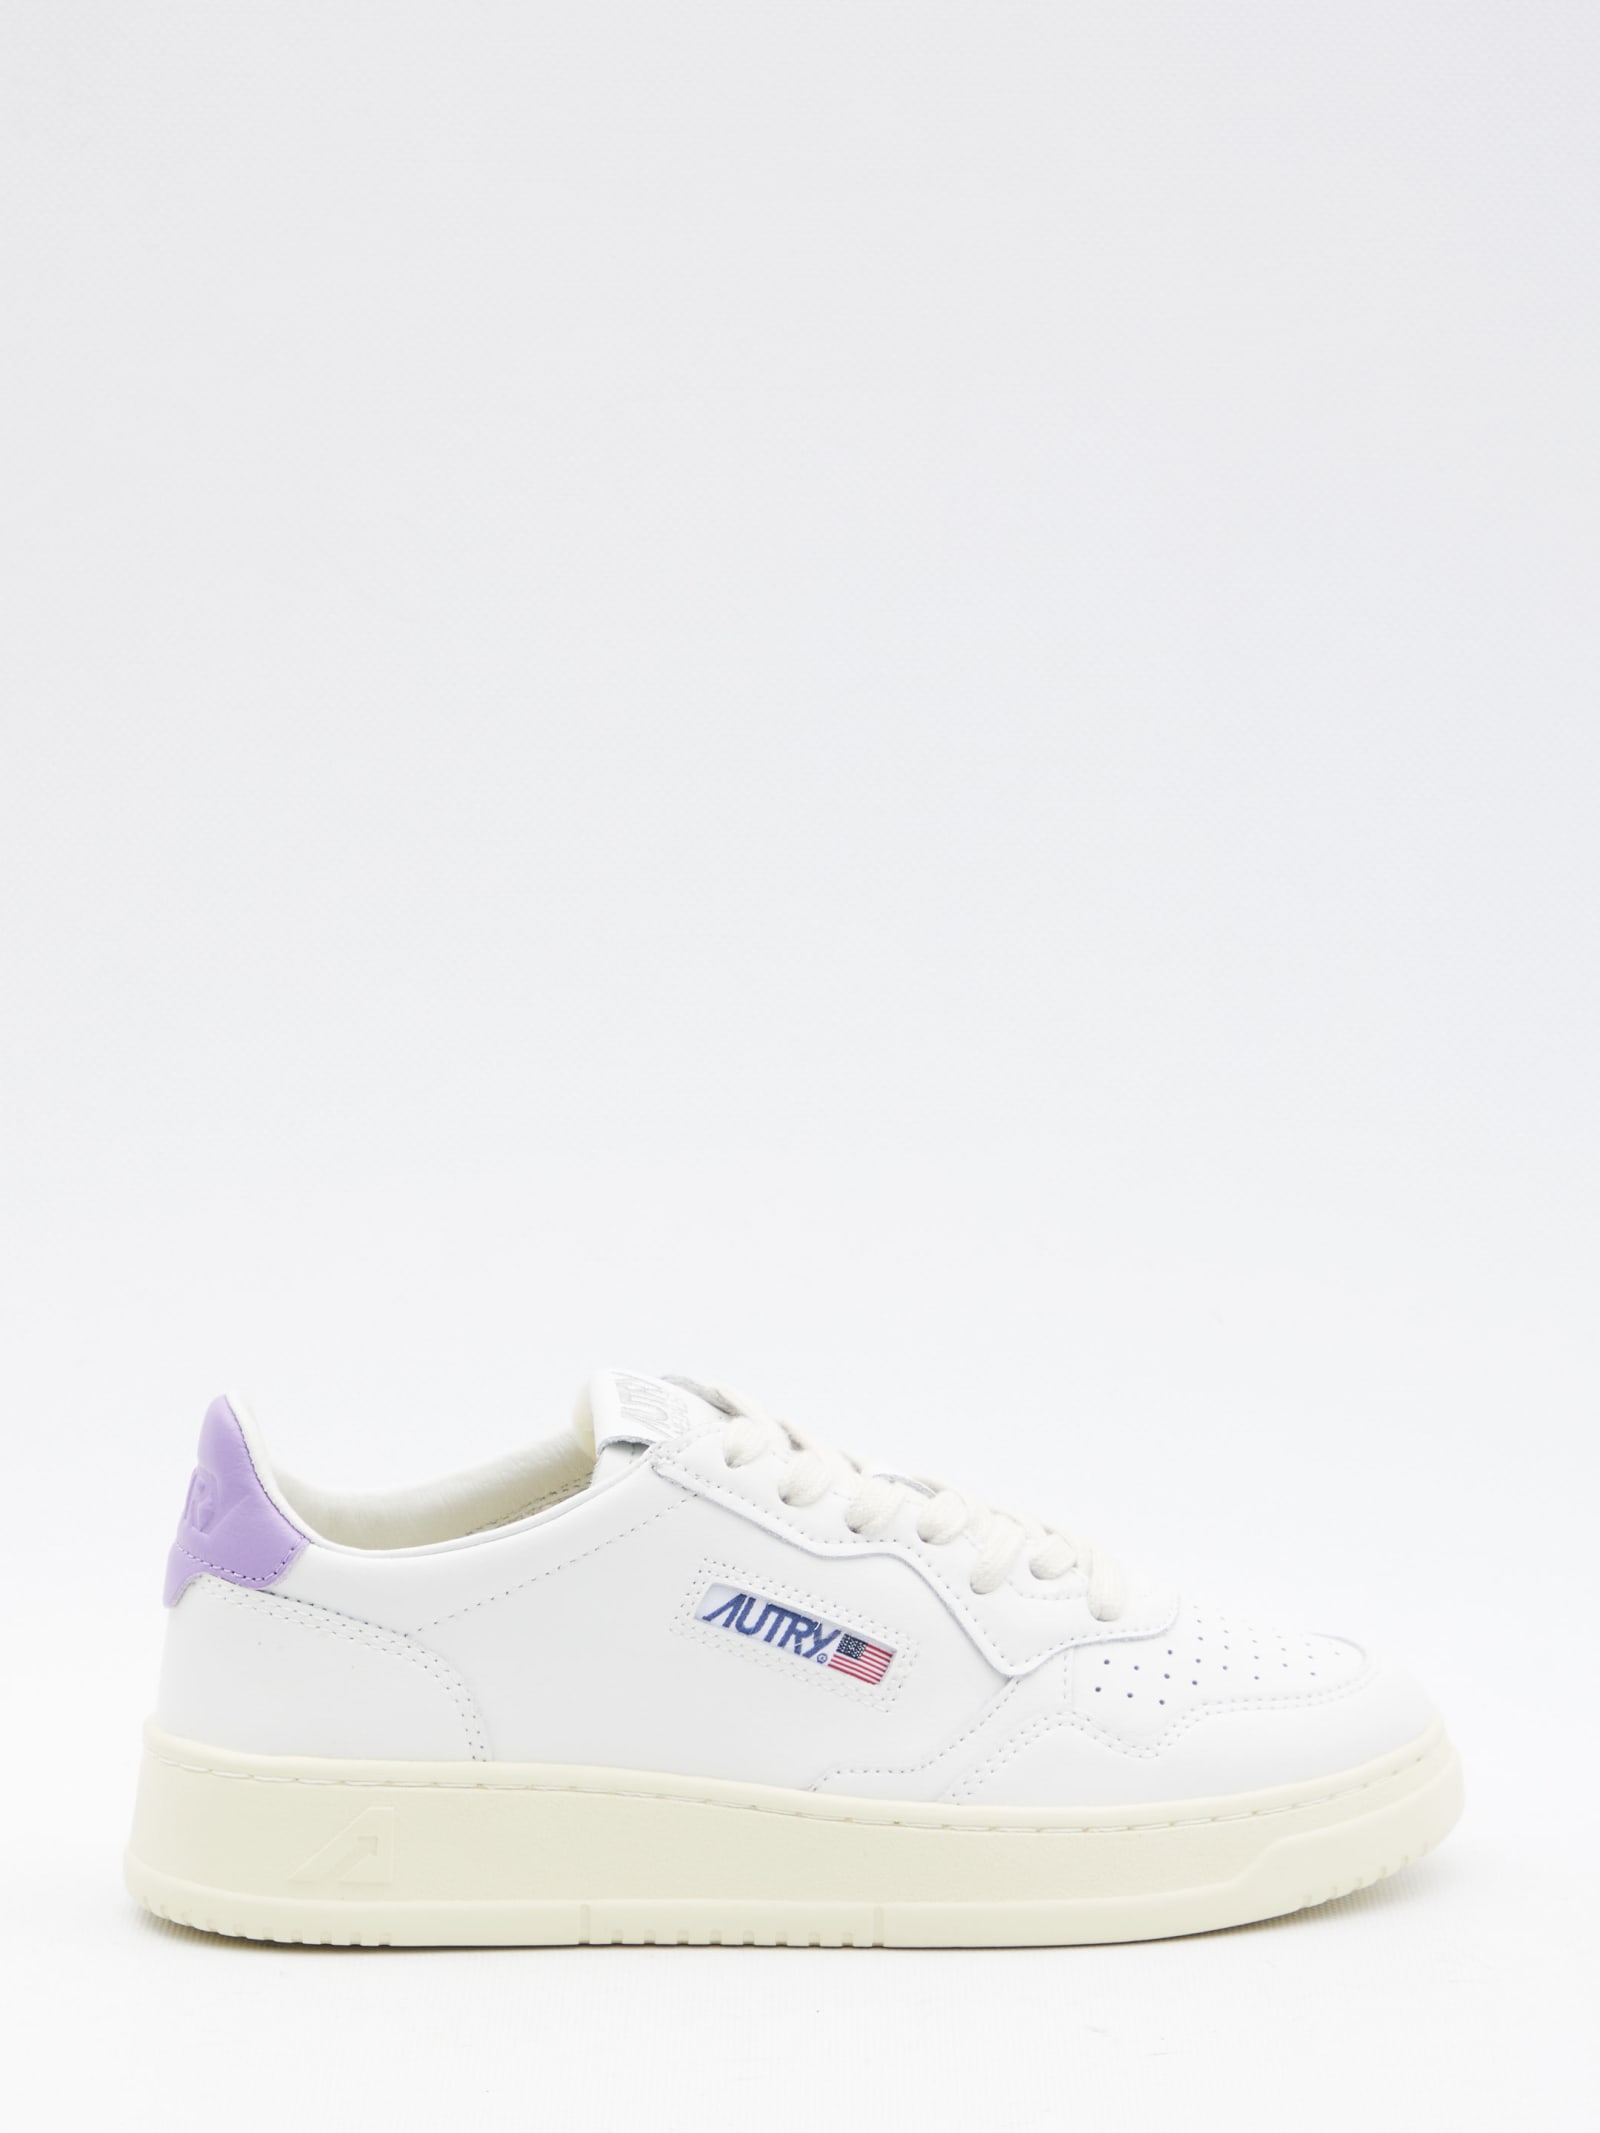 Shop Autry Medalist Sneakers In White/purple